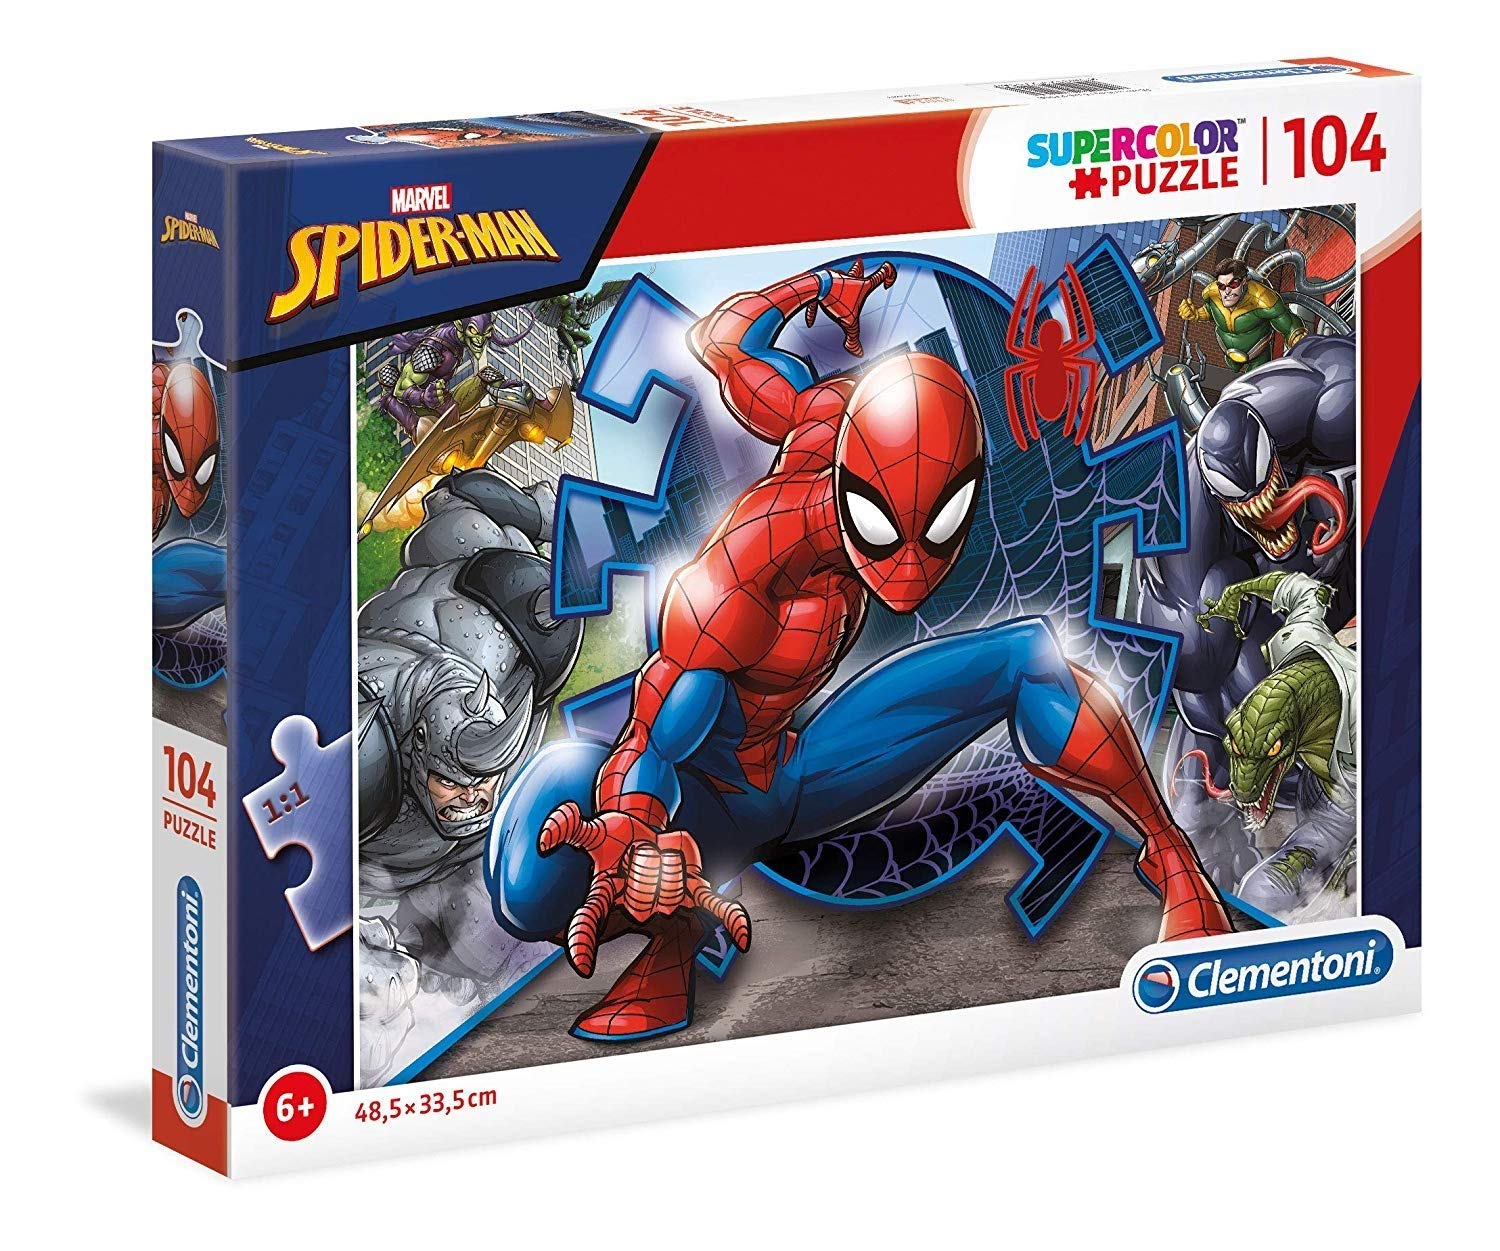 Clementoni Supercolor Jigsaw Puzzle Pieces Spiderman Multicoloured